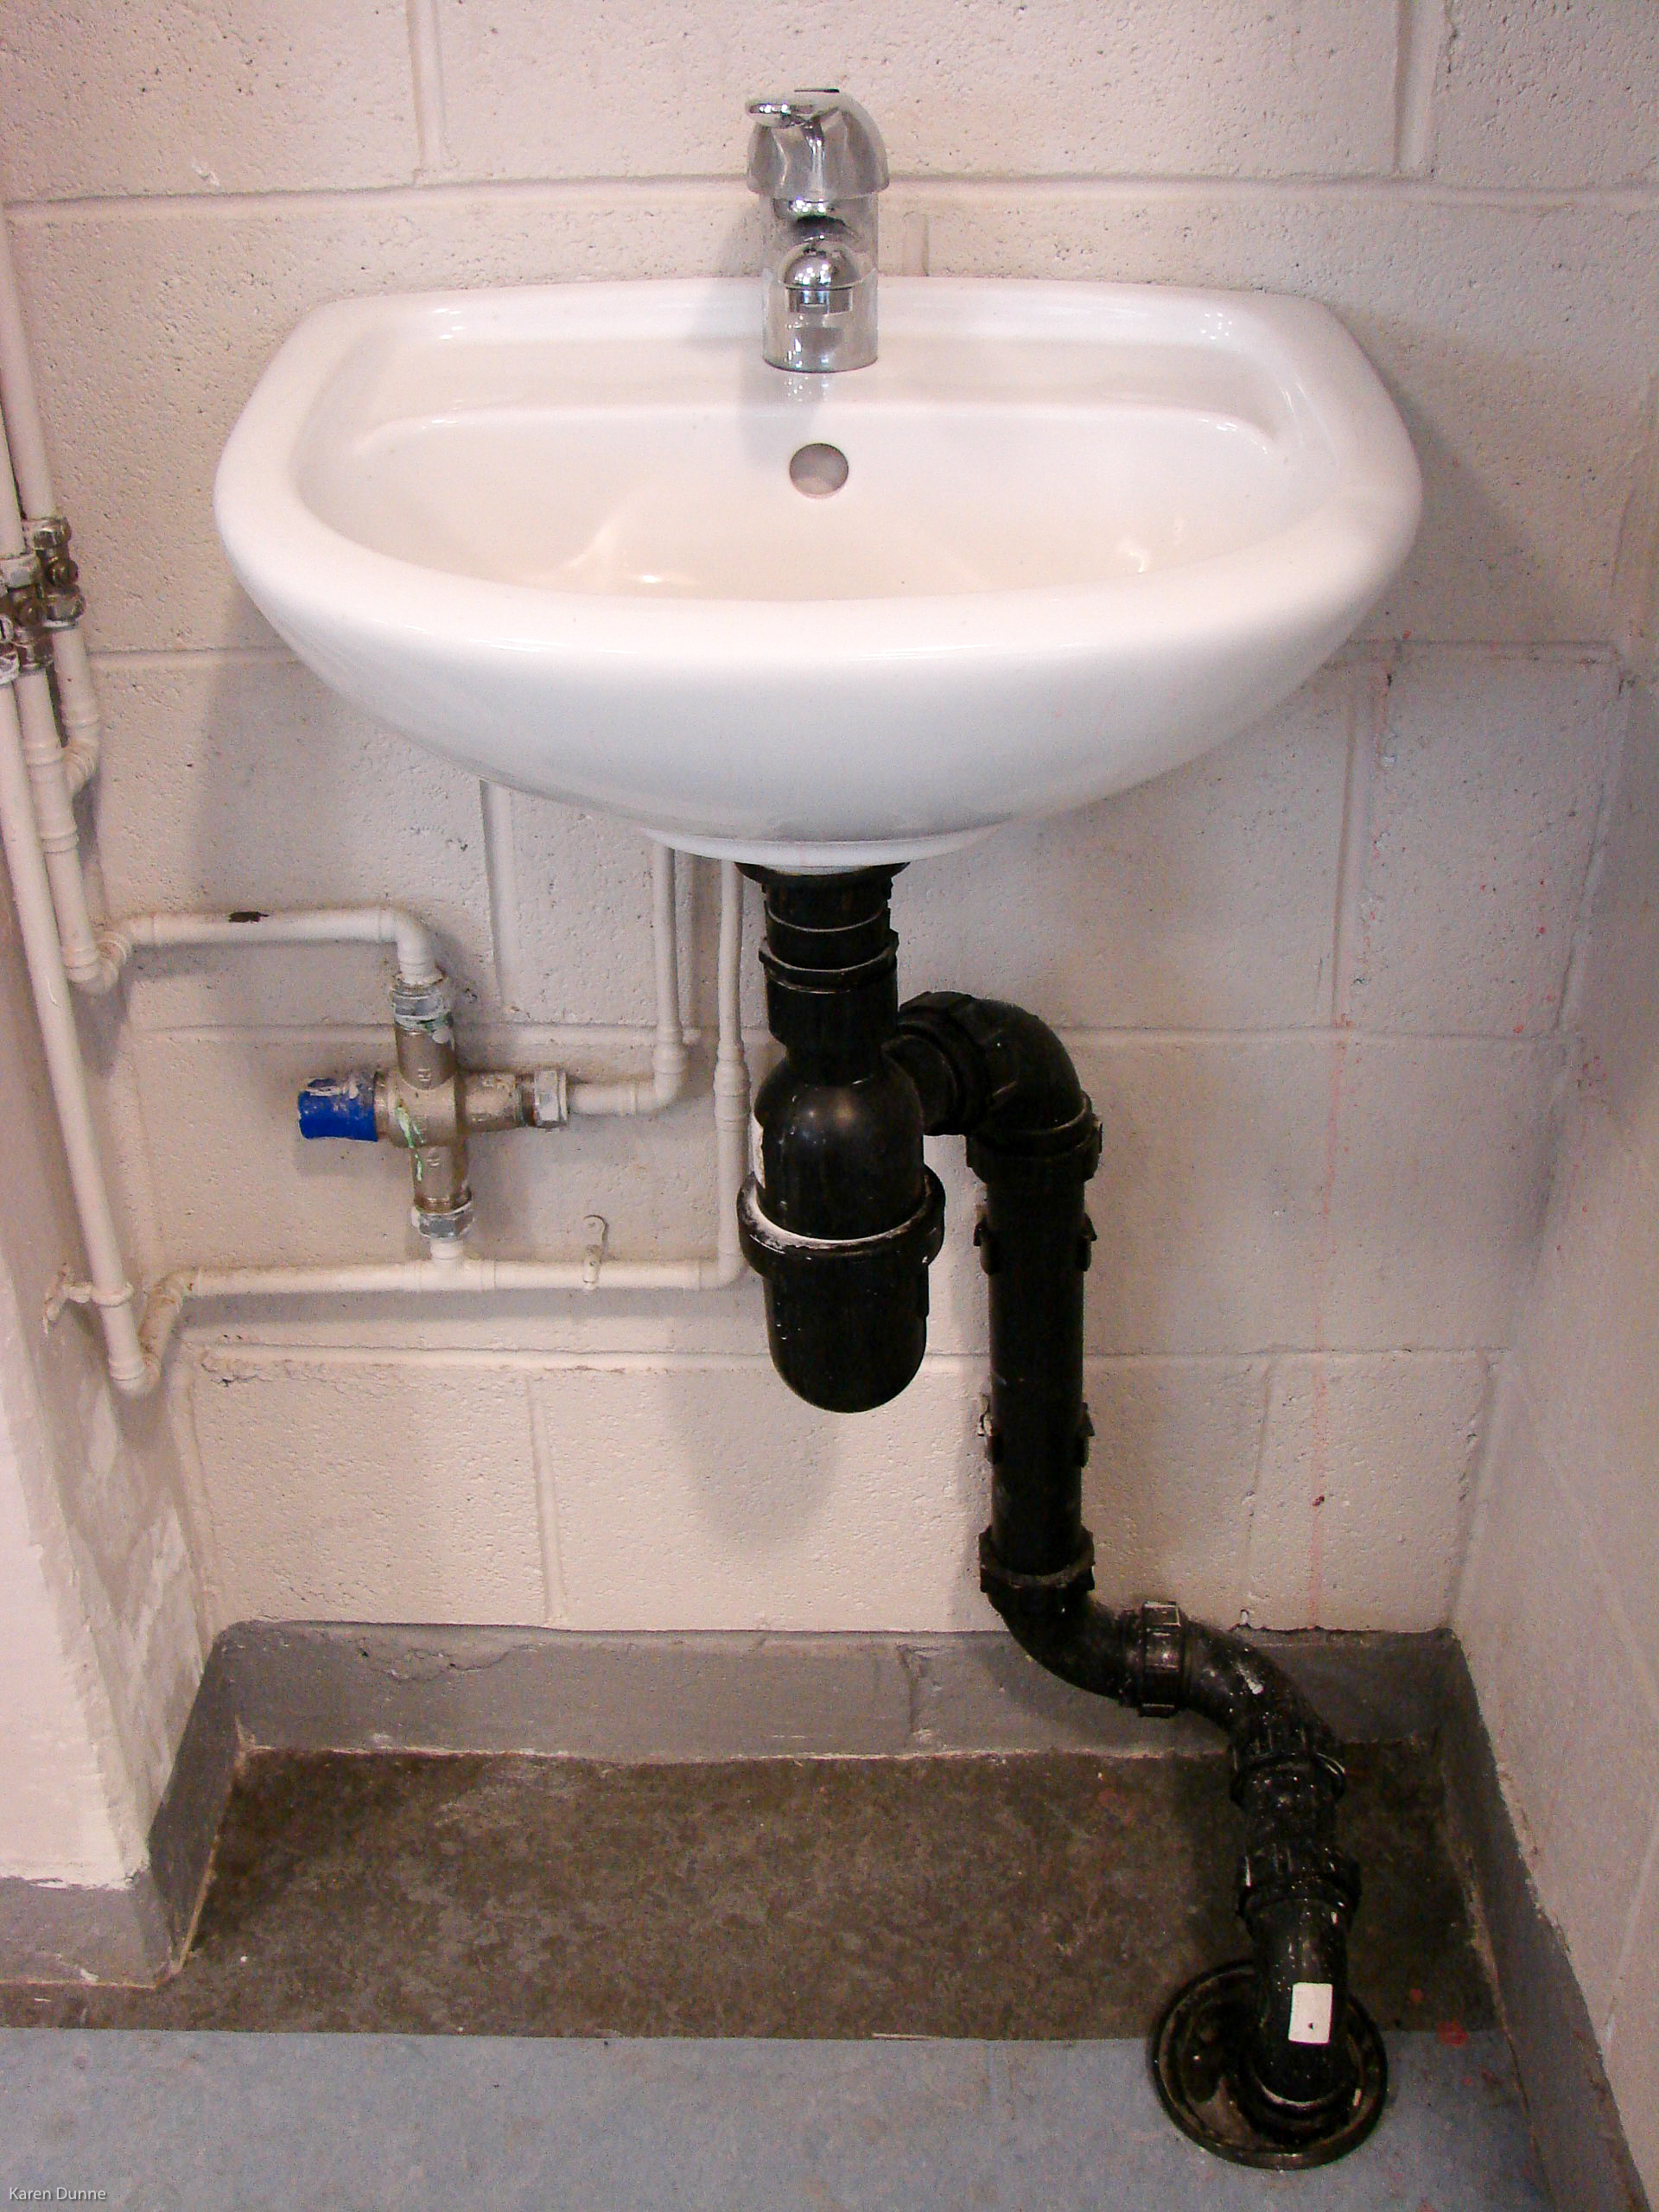 Dedicated hand wash basin